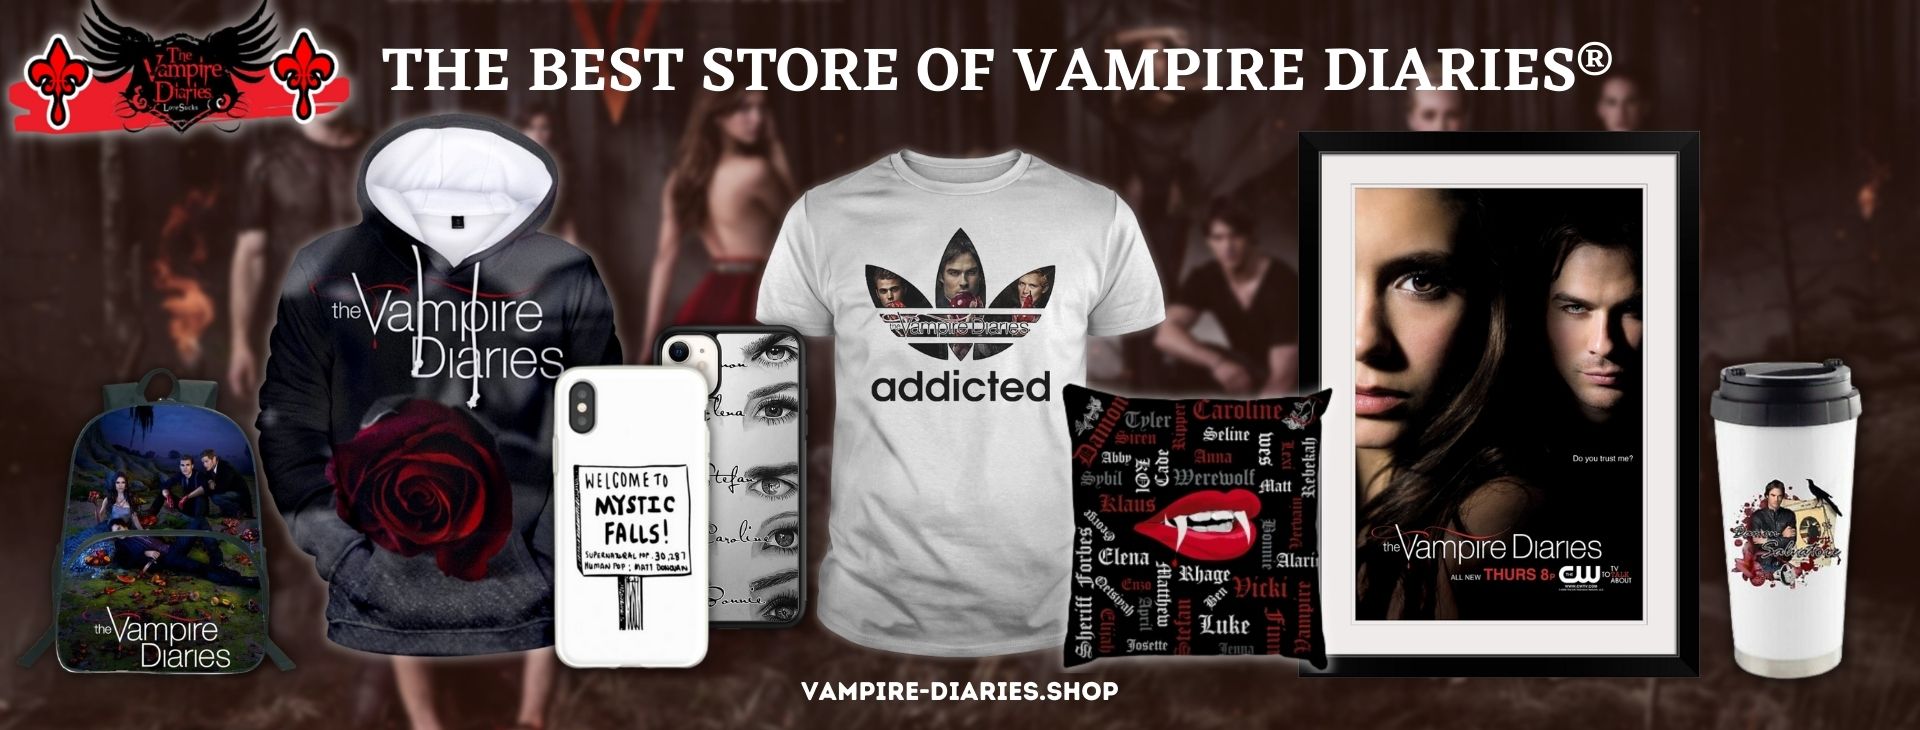 Vampire Diaries Shop Banner - Vampire Diaries Merch